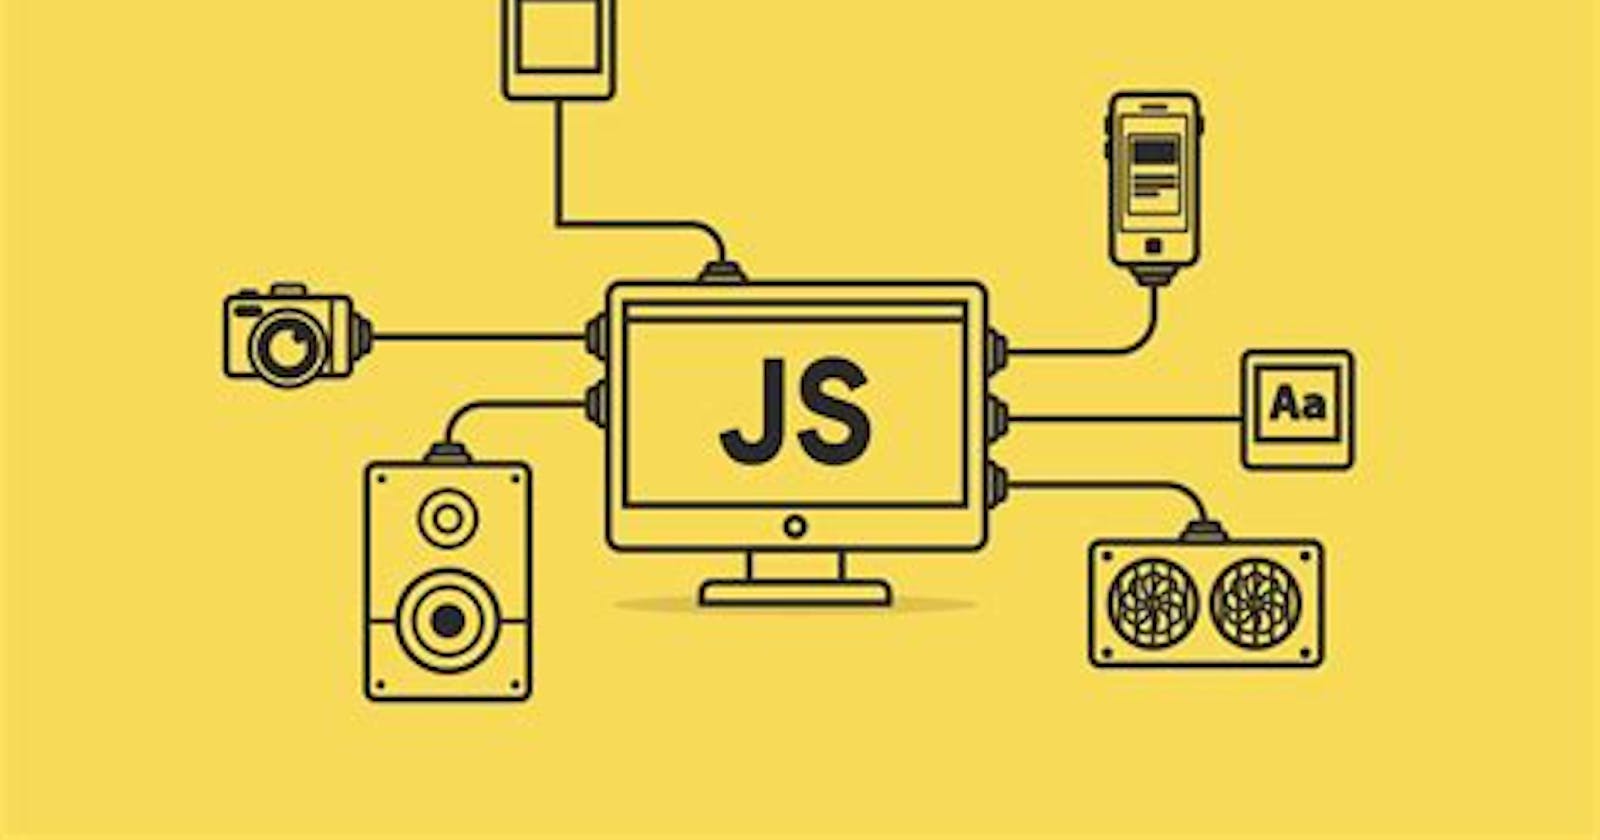 JavaScript Language in a Single Image